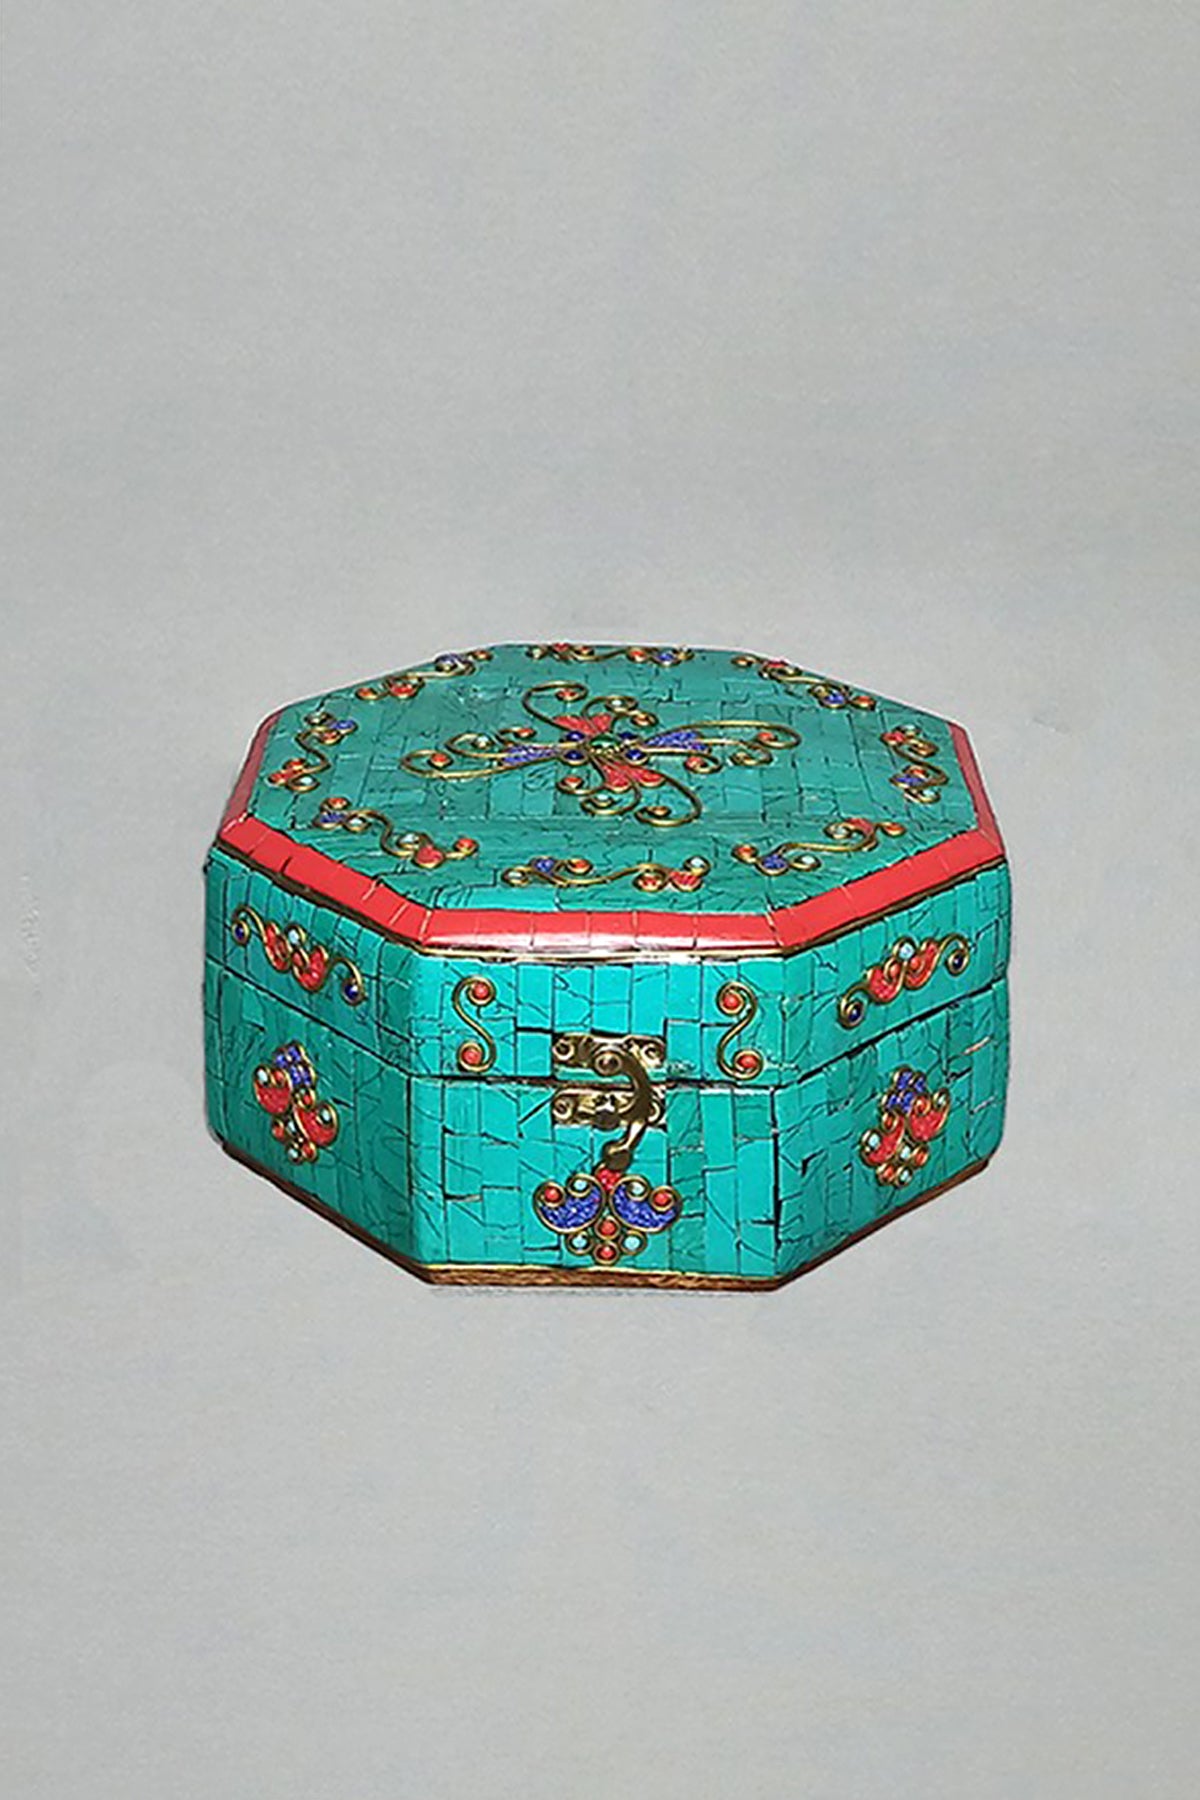 Home Decorative Elegant Stone inlaid jewelry box